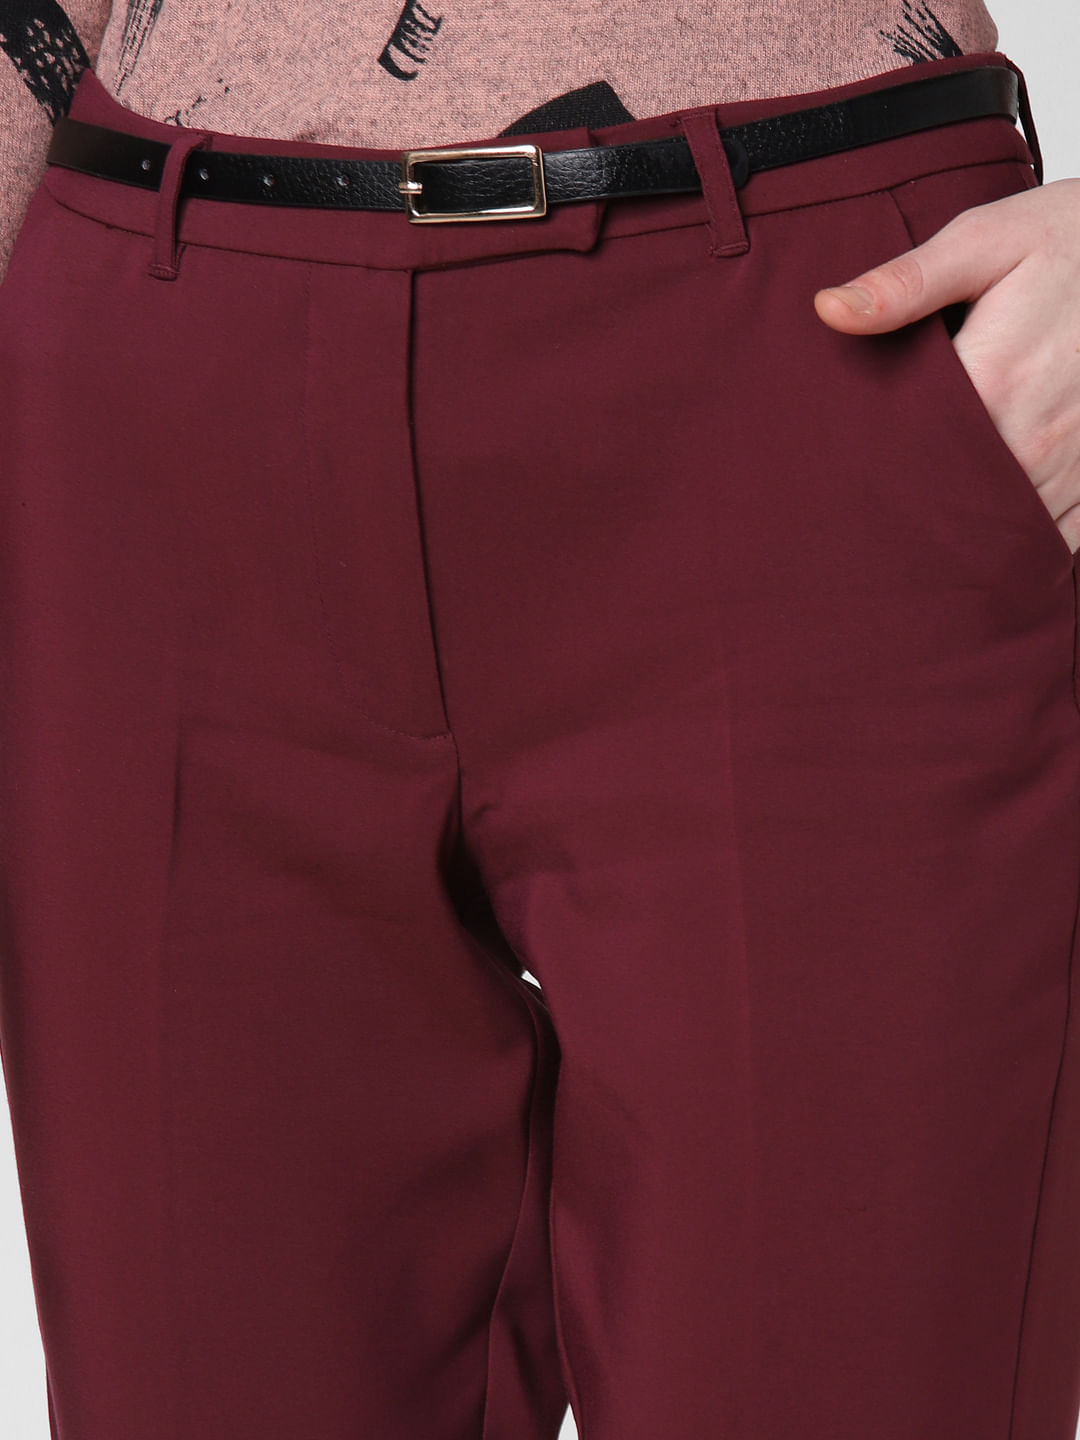 Reduce Price Hfyihgf Mens Dress Pants Slim Fit Solid Color Skinny Trousers  Classic Business Wedding Formal Flat Front Suit Pants(Wine,XL) - Walmart.com